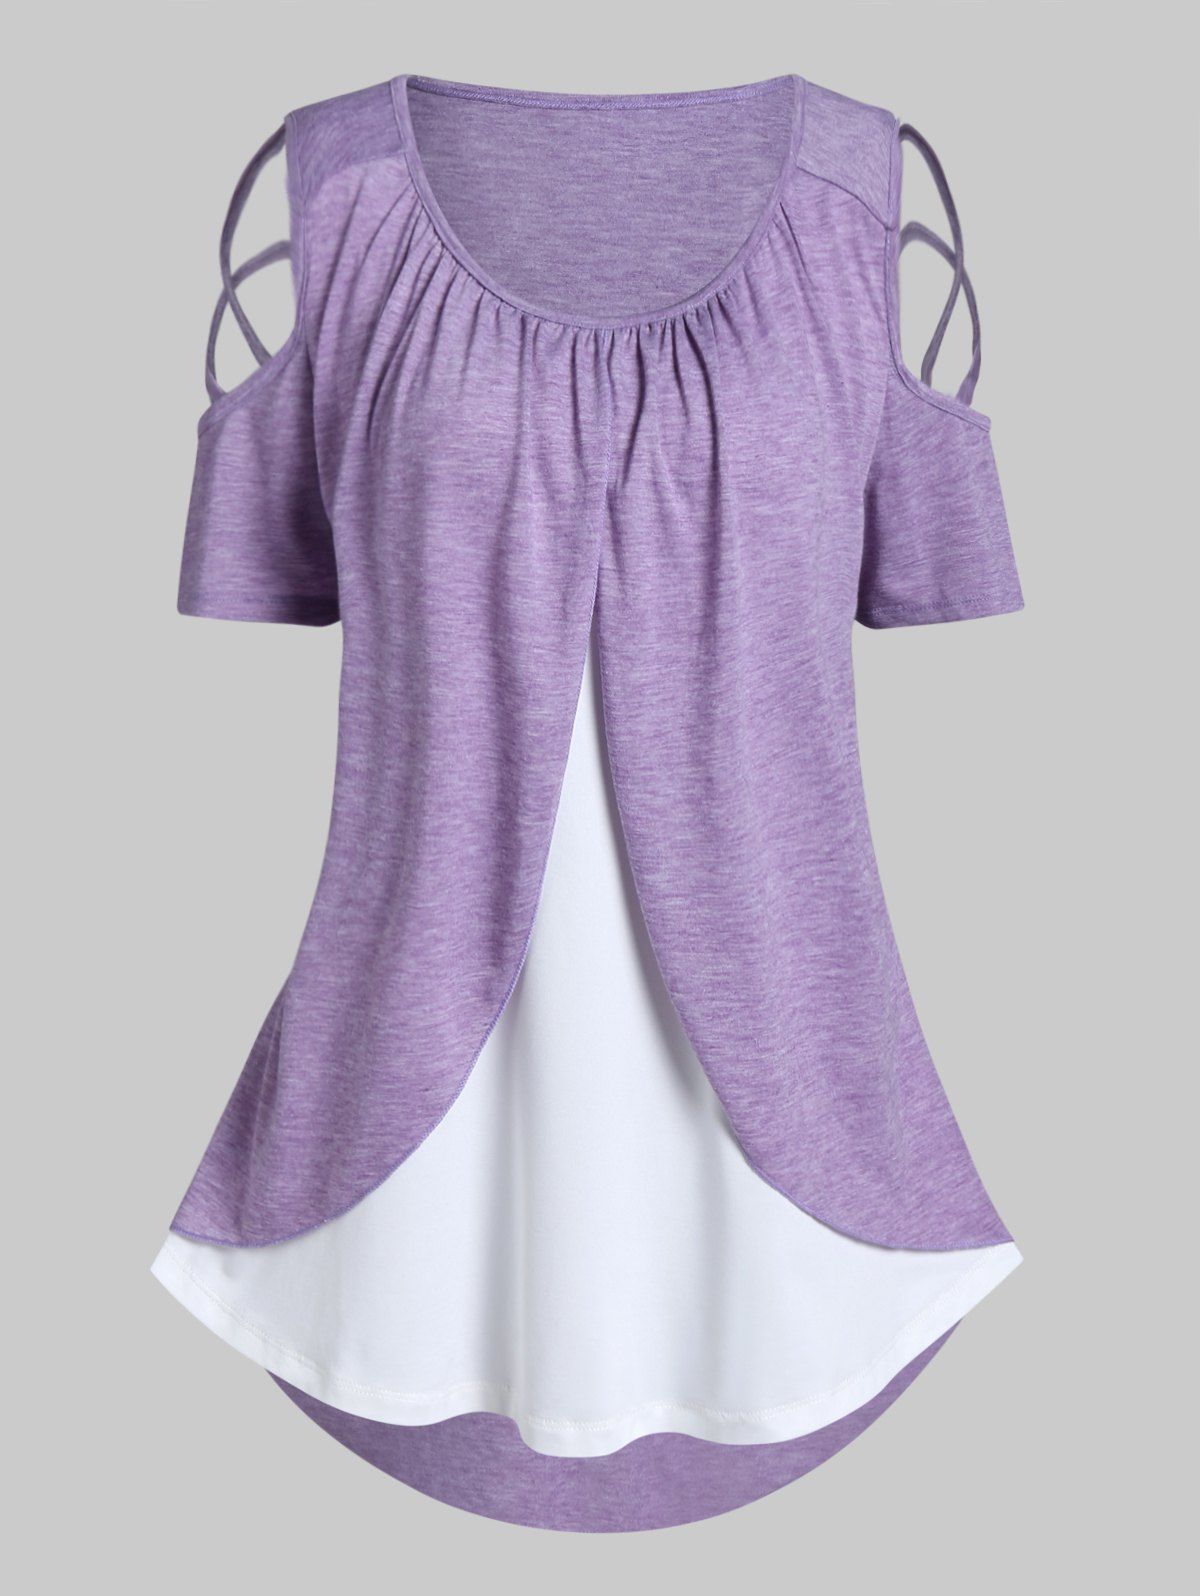 Plus Size T Shirt Colorblock Ruched Tulip Style T-shirt Asymmetric Lattice Short Sleeve Curve Tee - LIGHT PURPLE 3X